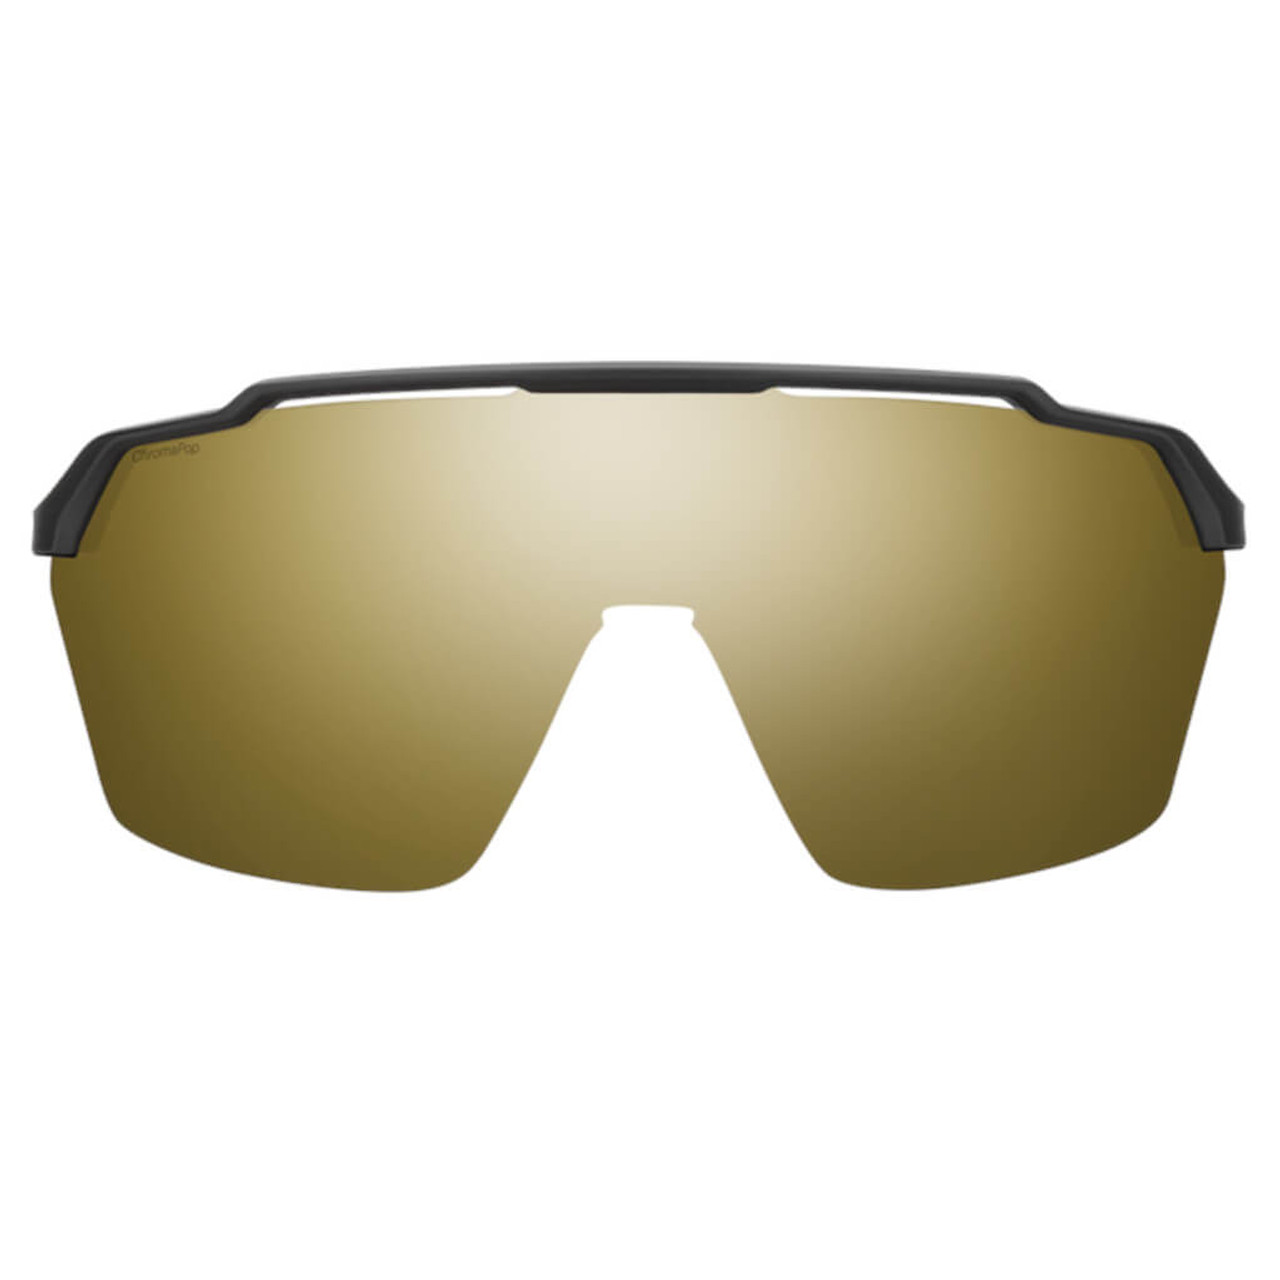 Chromapop Black Gold Mirror- Smith Shift XL MAG Lenses